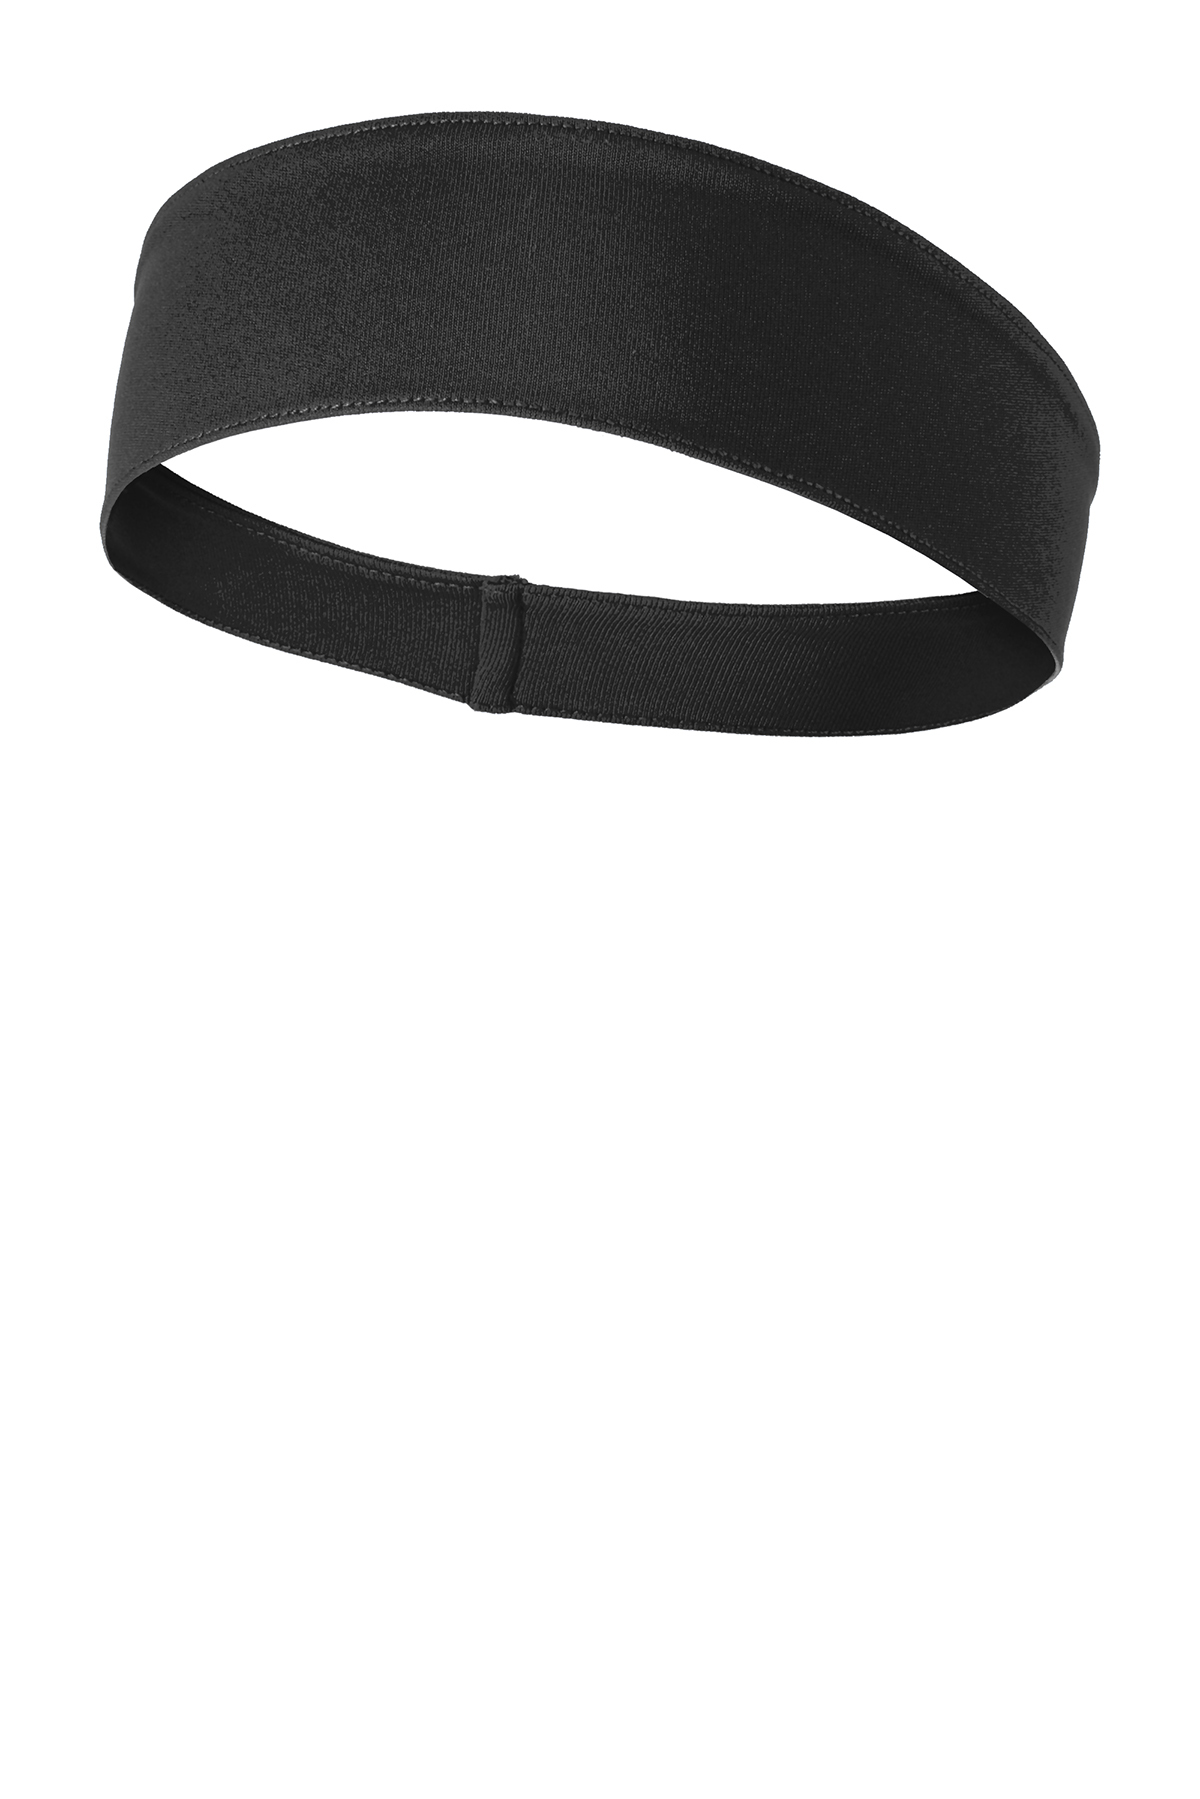 Sport HG Bit Headband Black